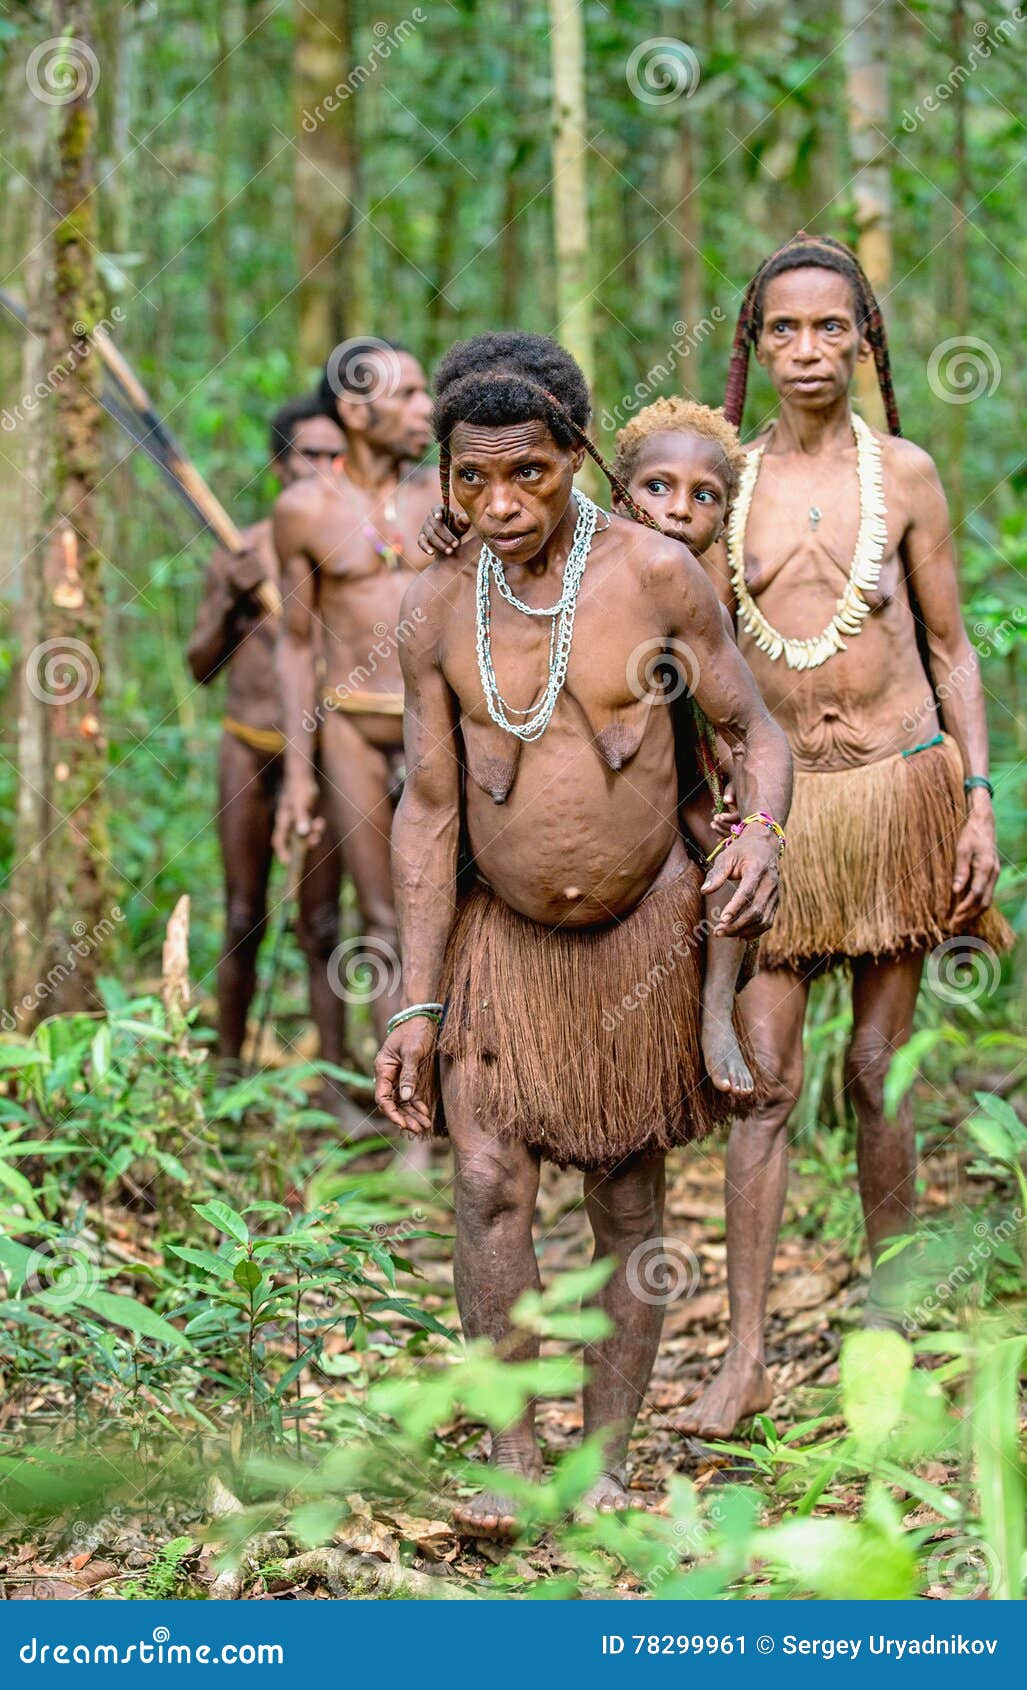 Naked Ebony Bodies Nude Tribal People